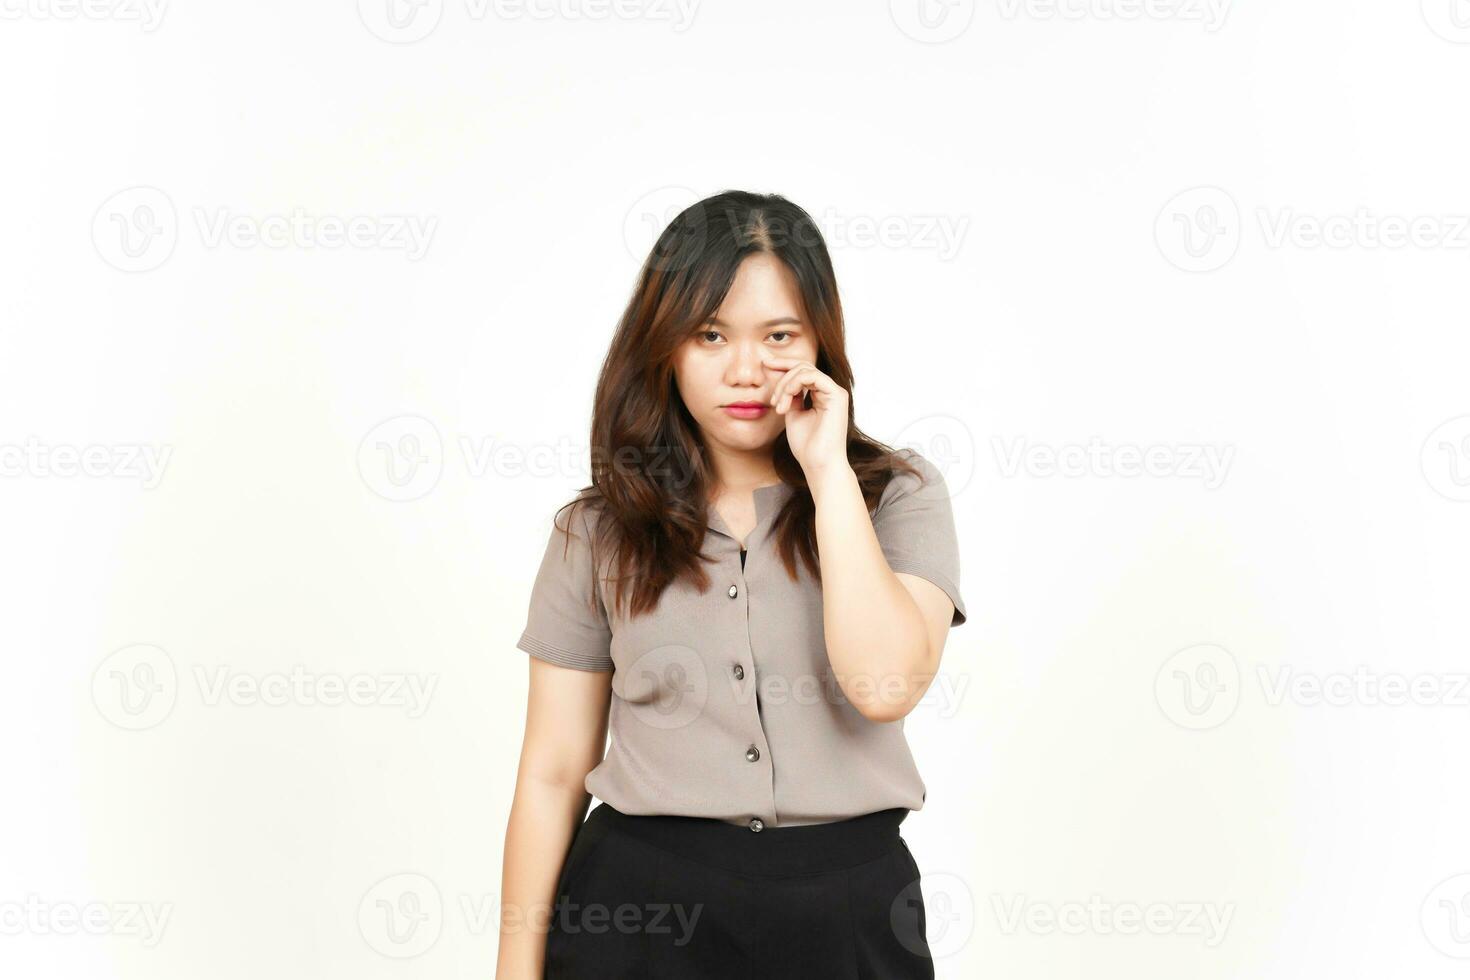 triste llorar cara expresión de hermosa asiático mujer aislado en blanco antecedentes foto